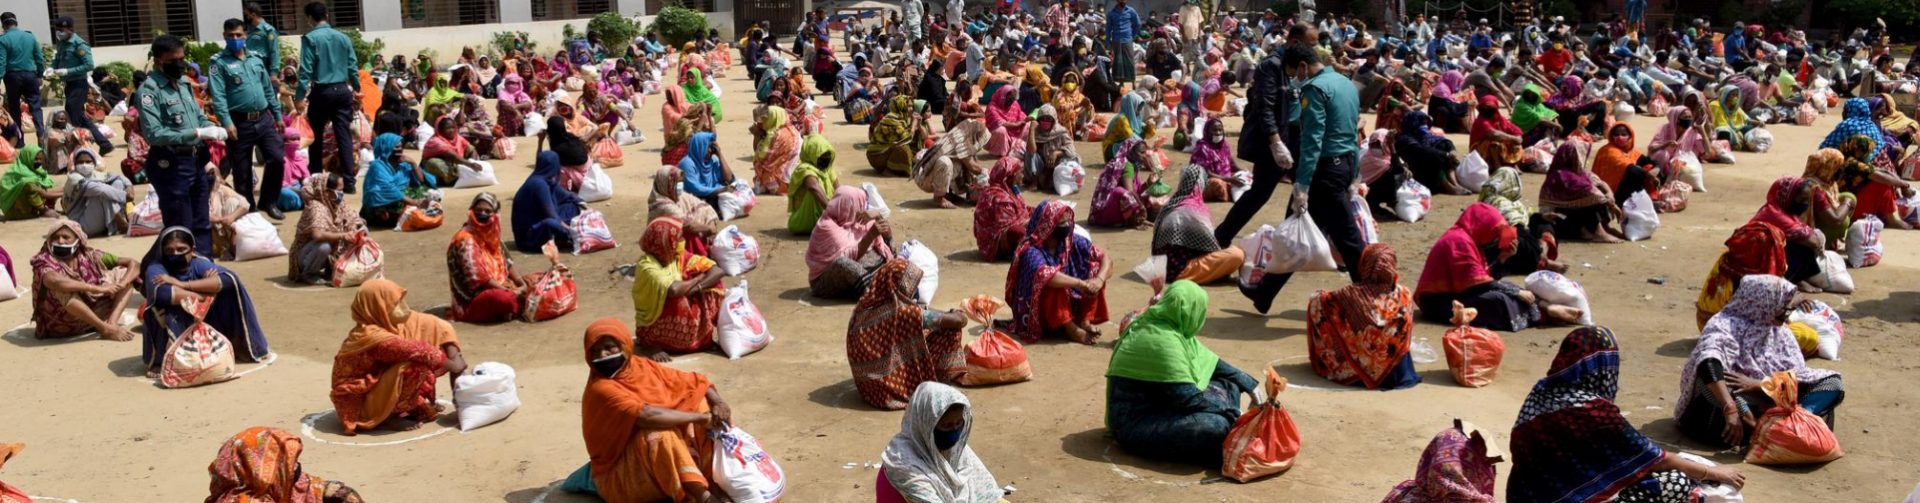 Survey: A major food transfer program in Bangladesh fell short during the COVID-19 pandemic